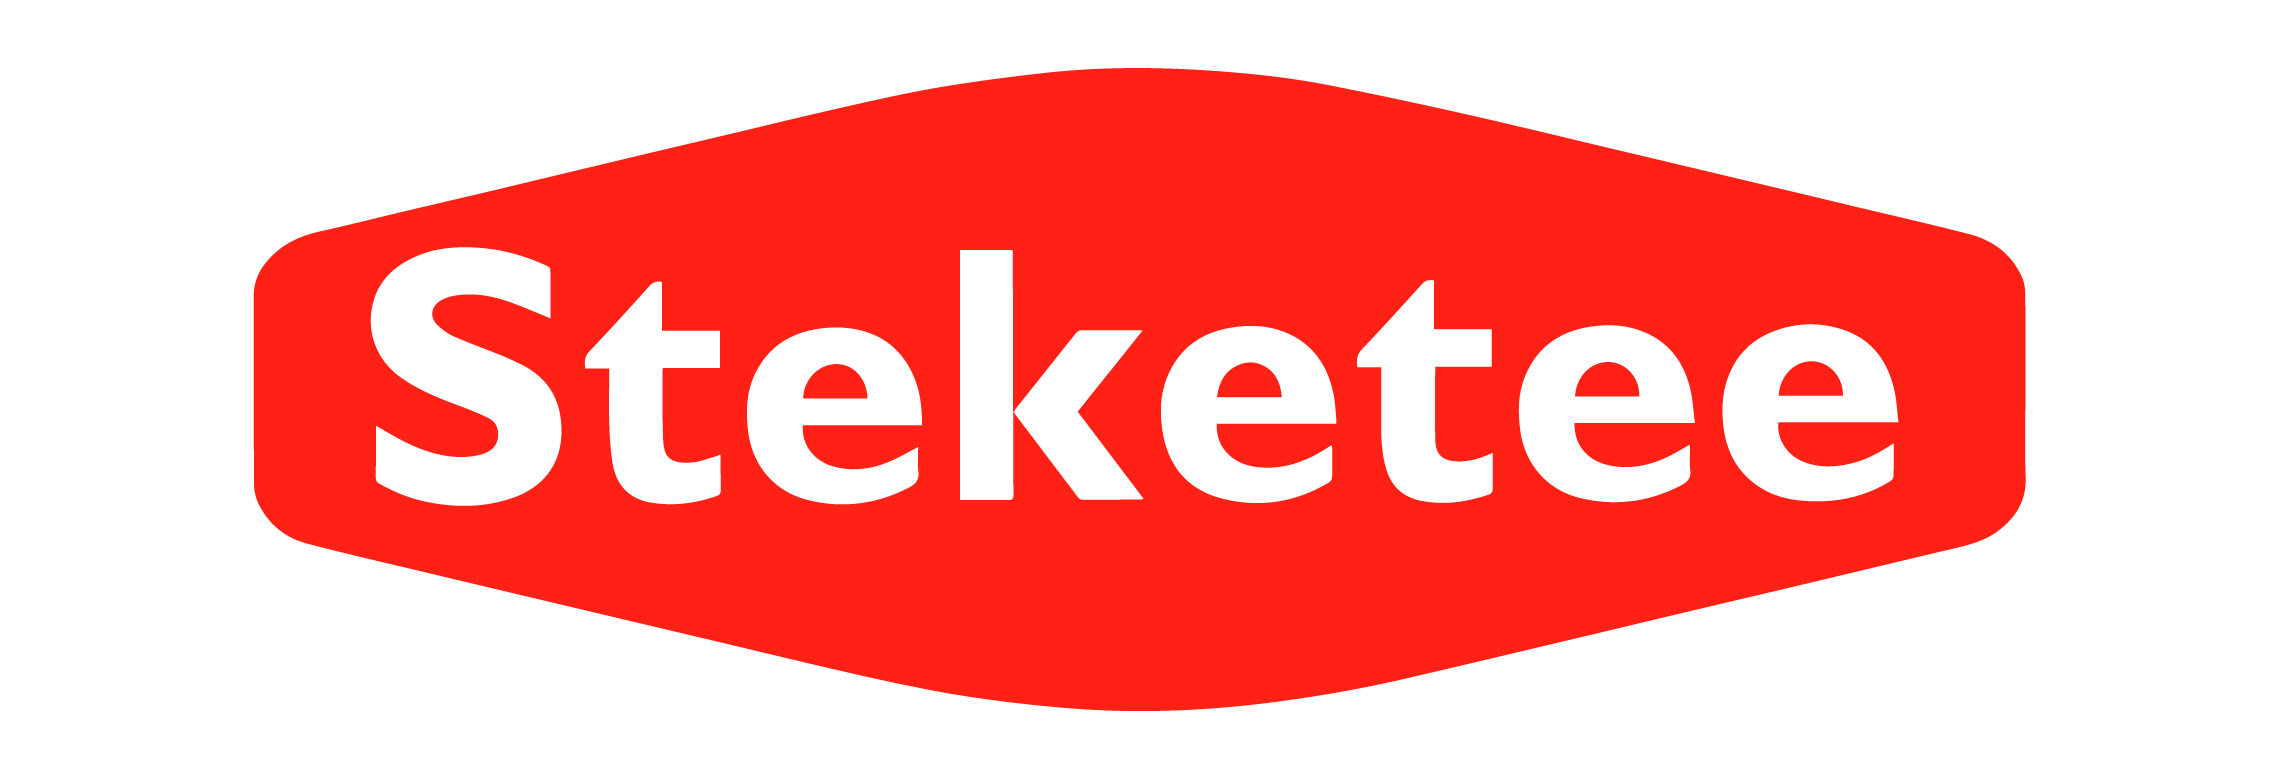 Steketee Logo